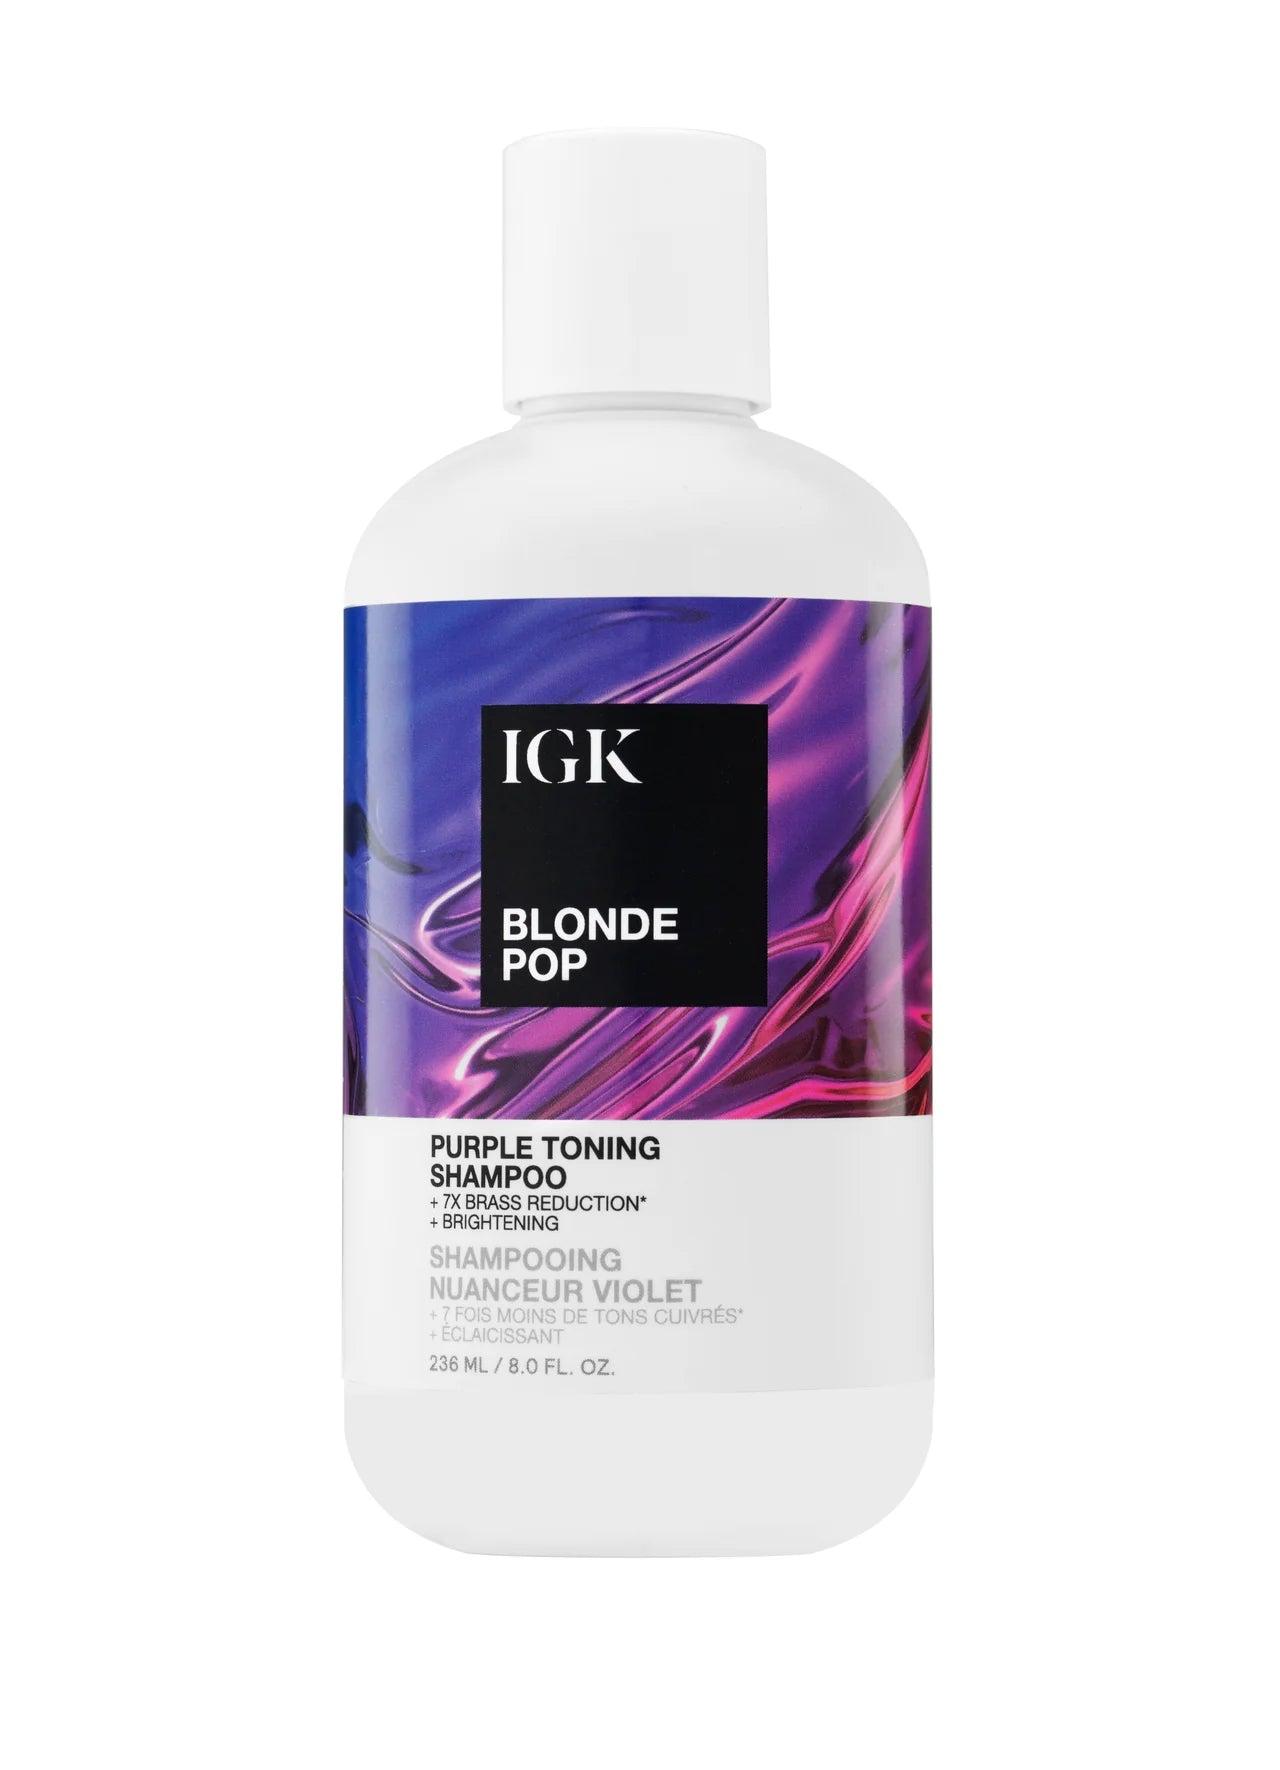 IGK Blonde Pop purple toning shampoo